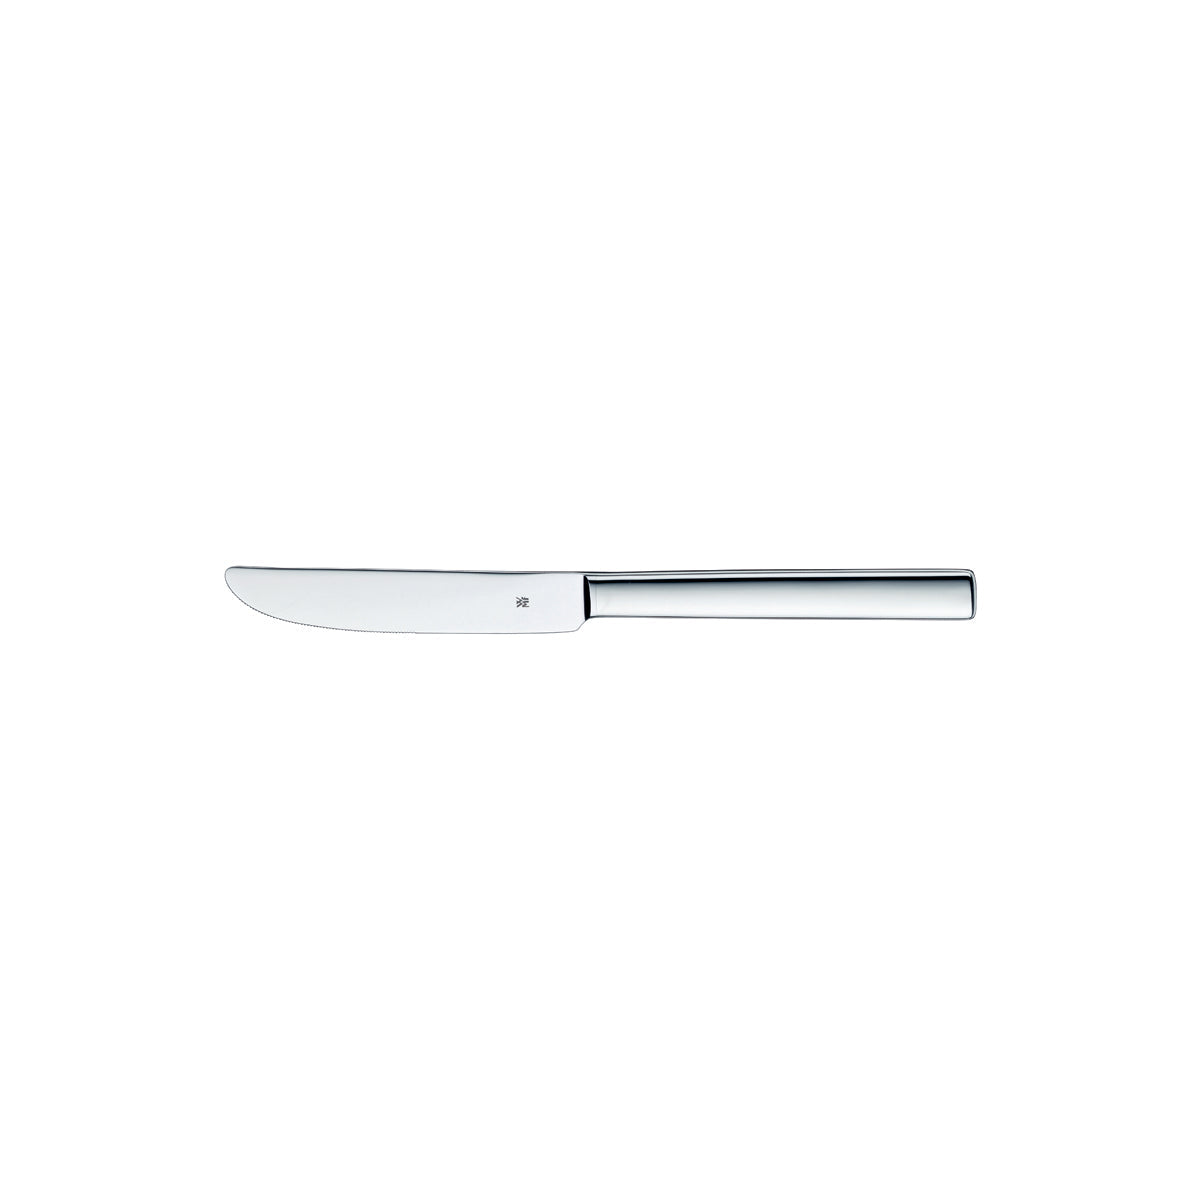 12.5303.6049 WMF Unic Table Knife Stainless Steel Tomkin Australia Hospitality Supplies